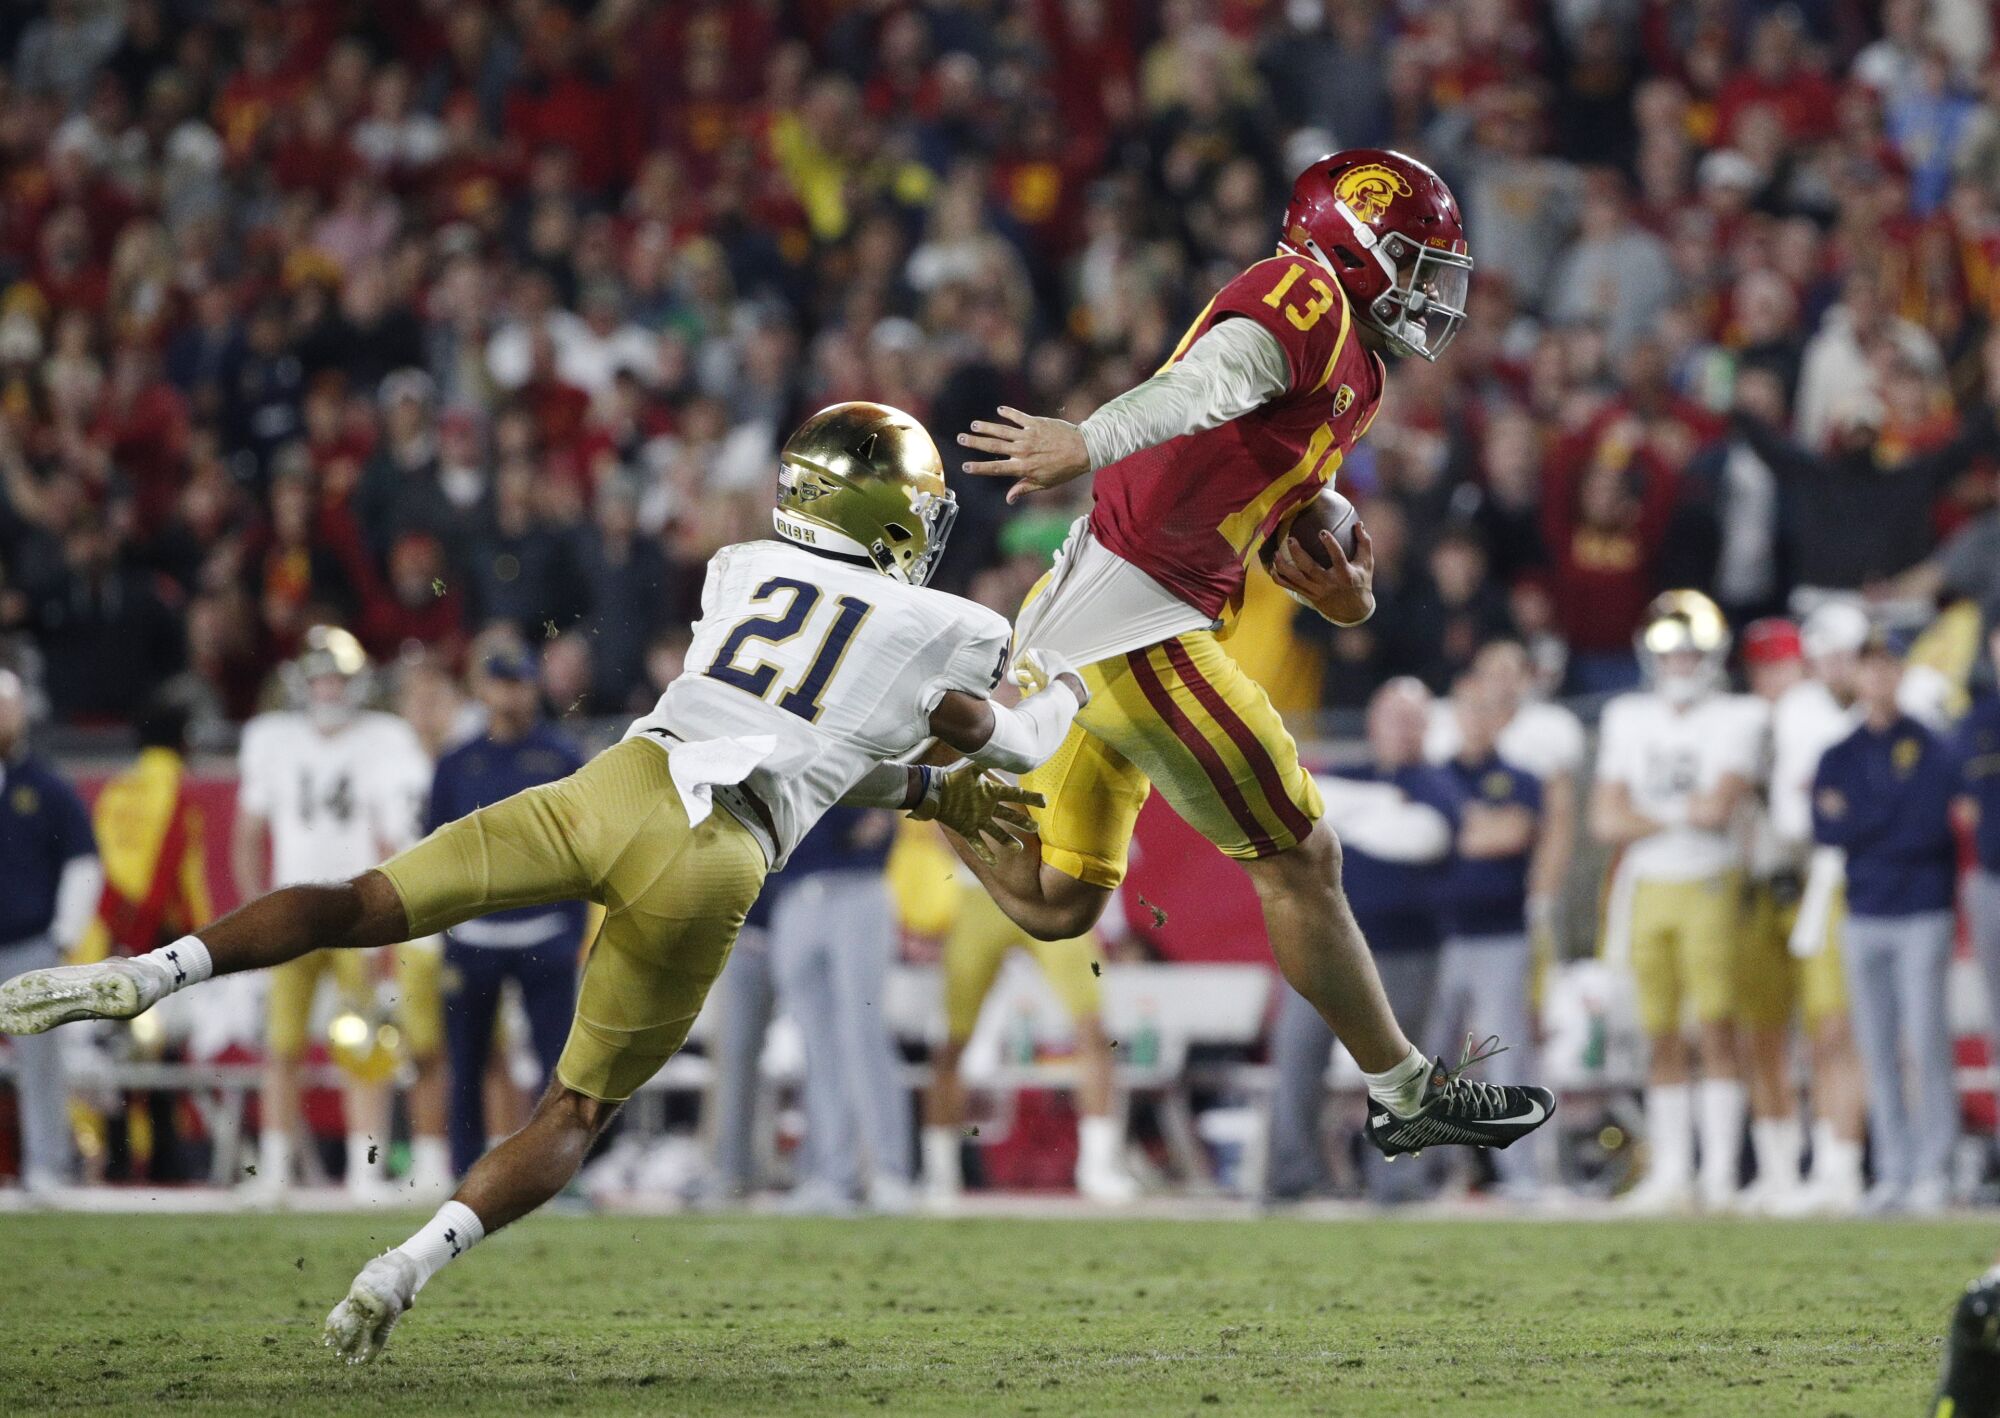 USC quarterback Caleb Williams evades a tackle attempt by Notre Dame cornerback Jaden Mickey